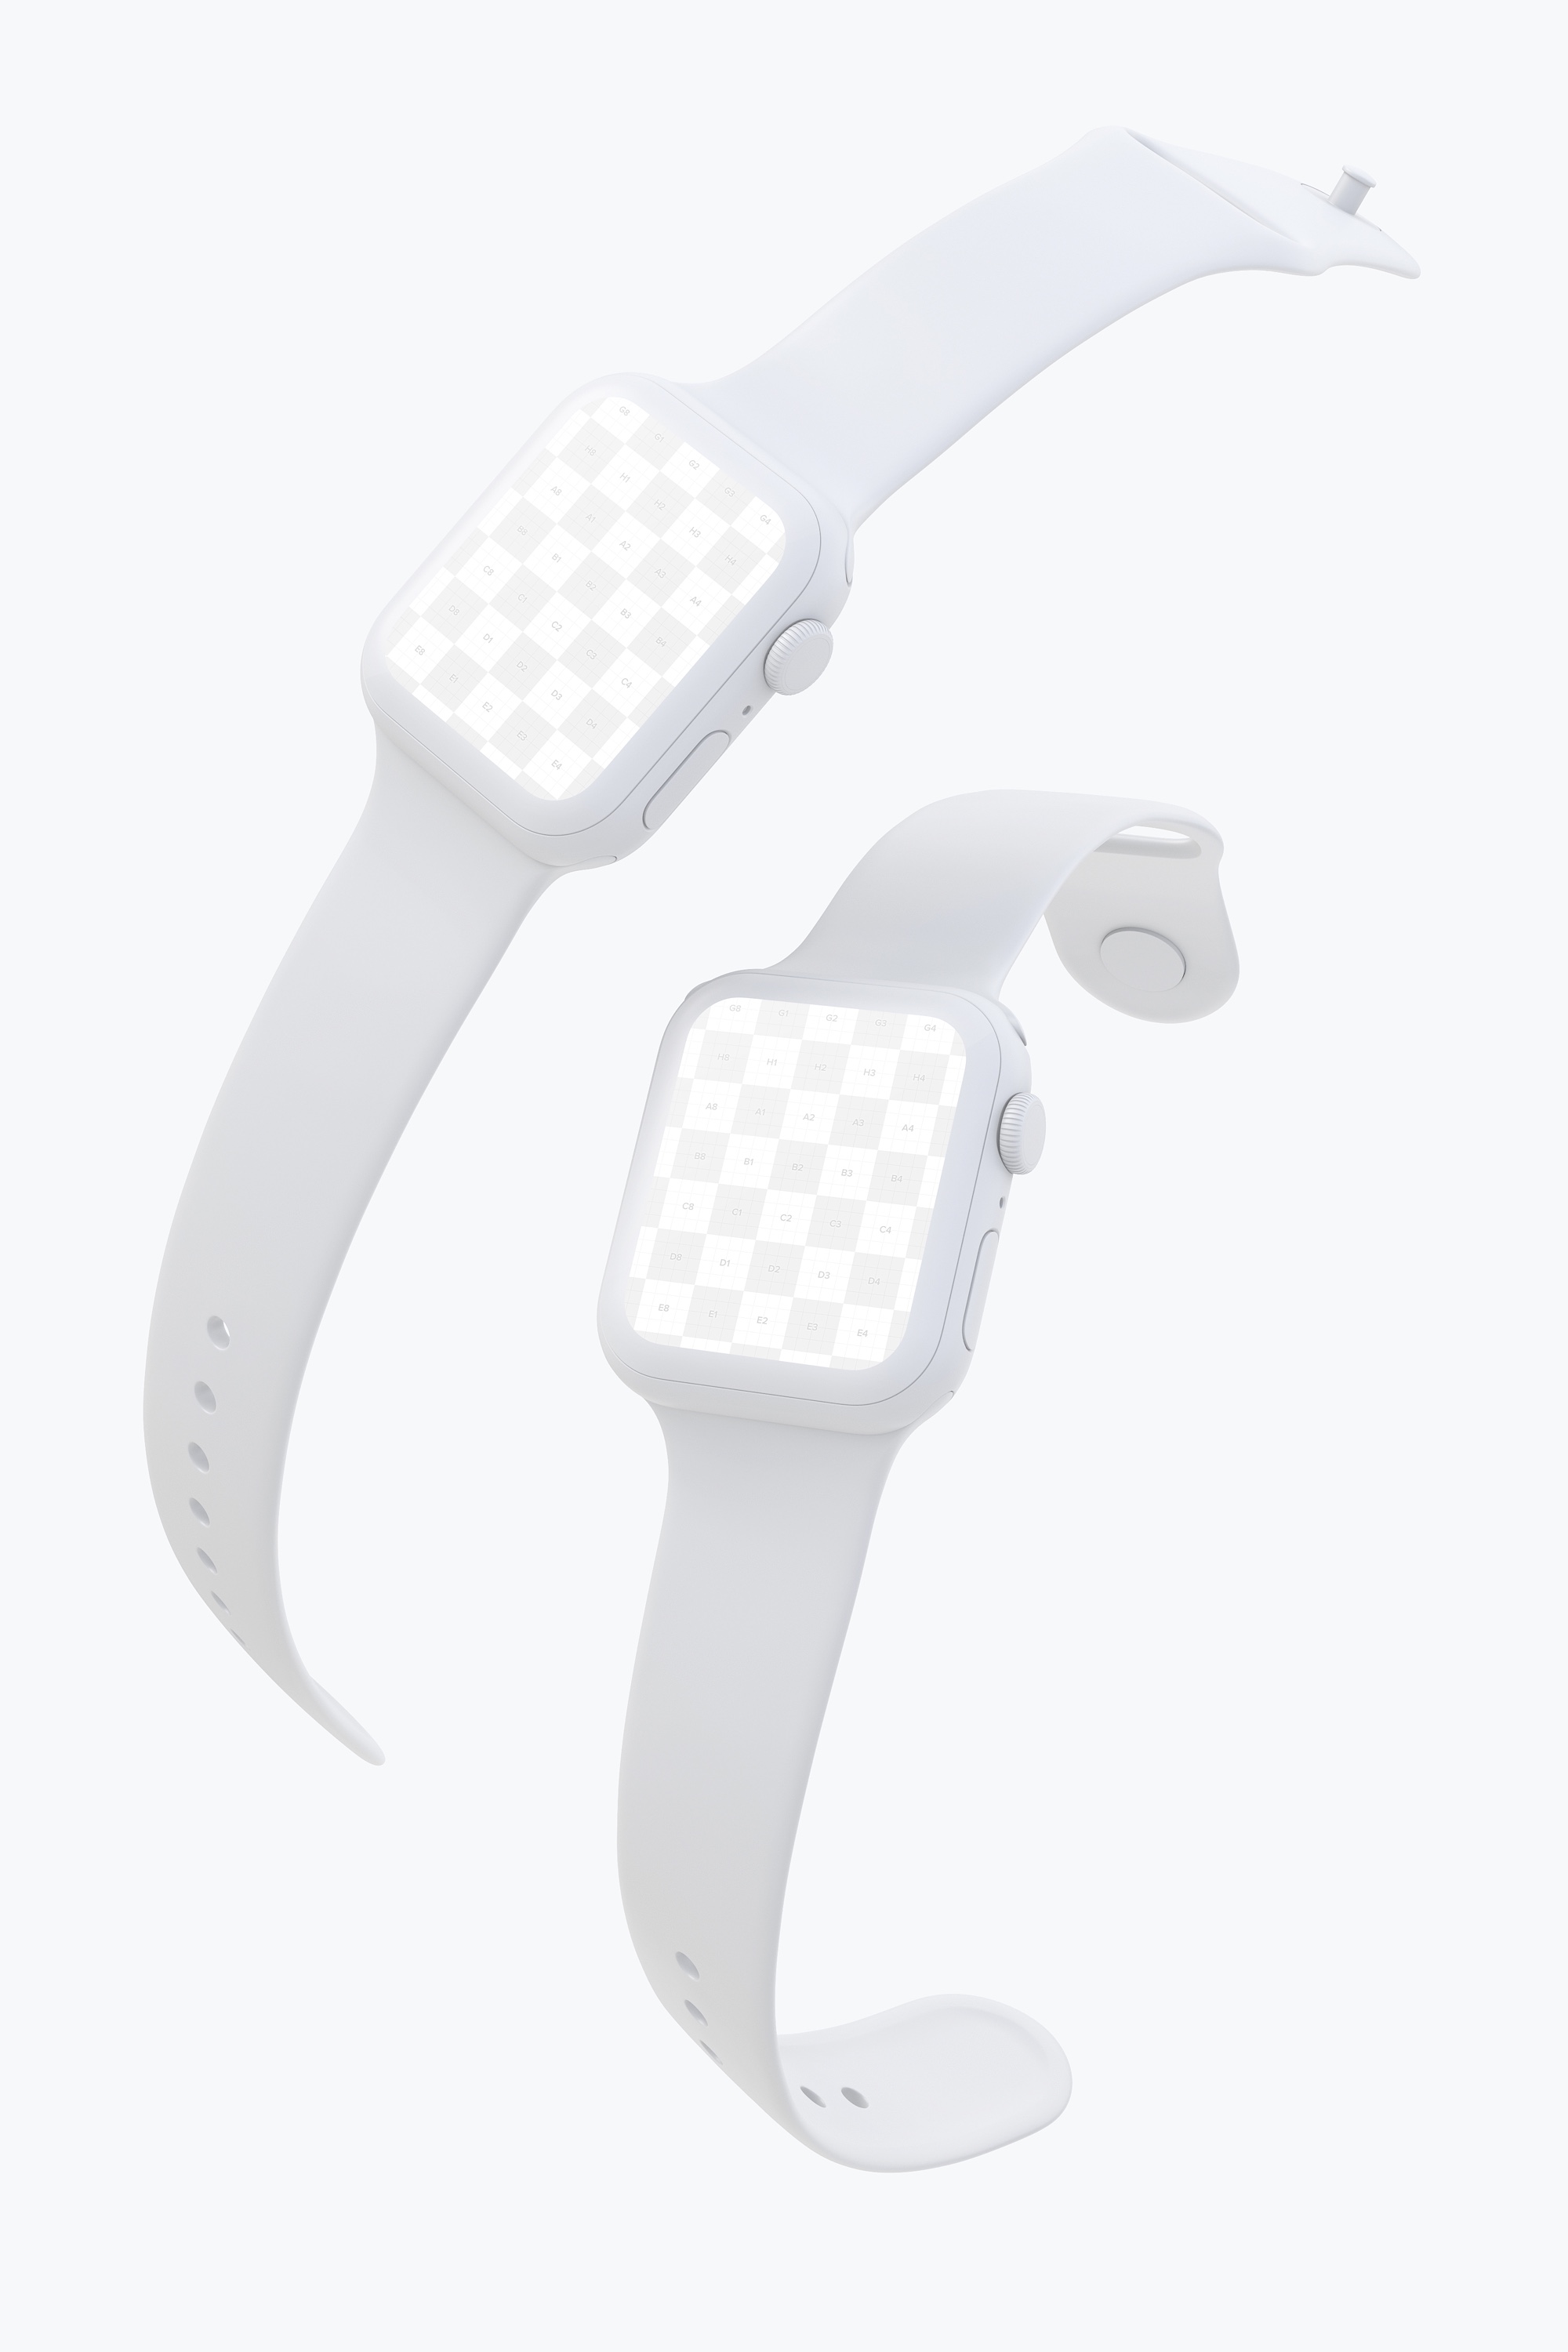 Apple Watch 4智能手表屏幕界面设计图样机04 Clay Apple Watch Series 4 (44mm) Mockup 04插图(1)